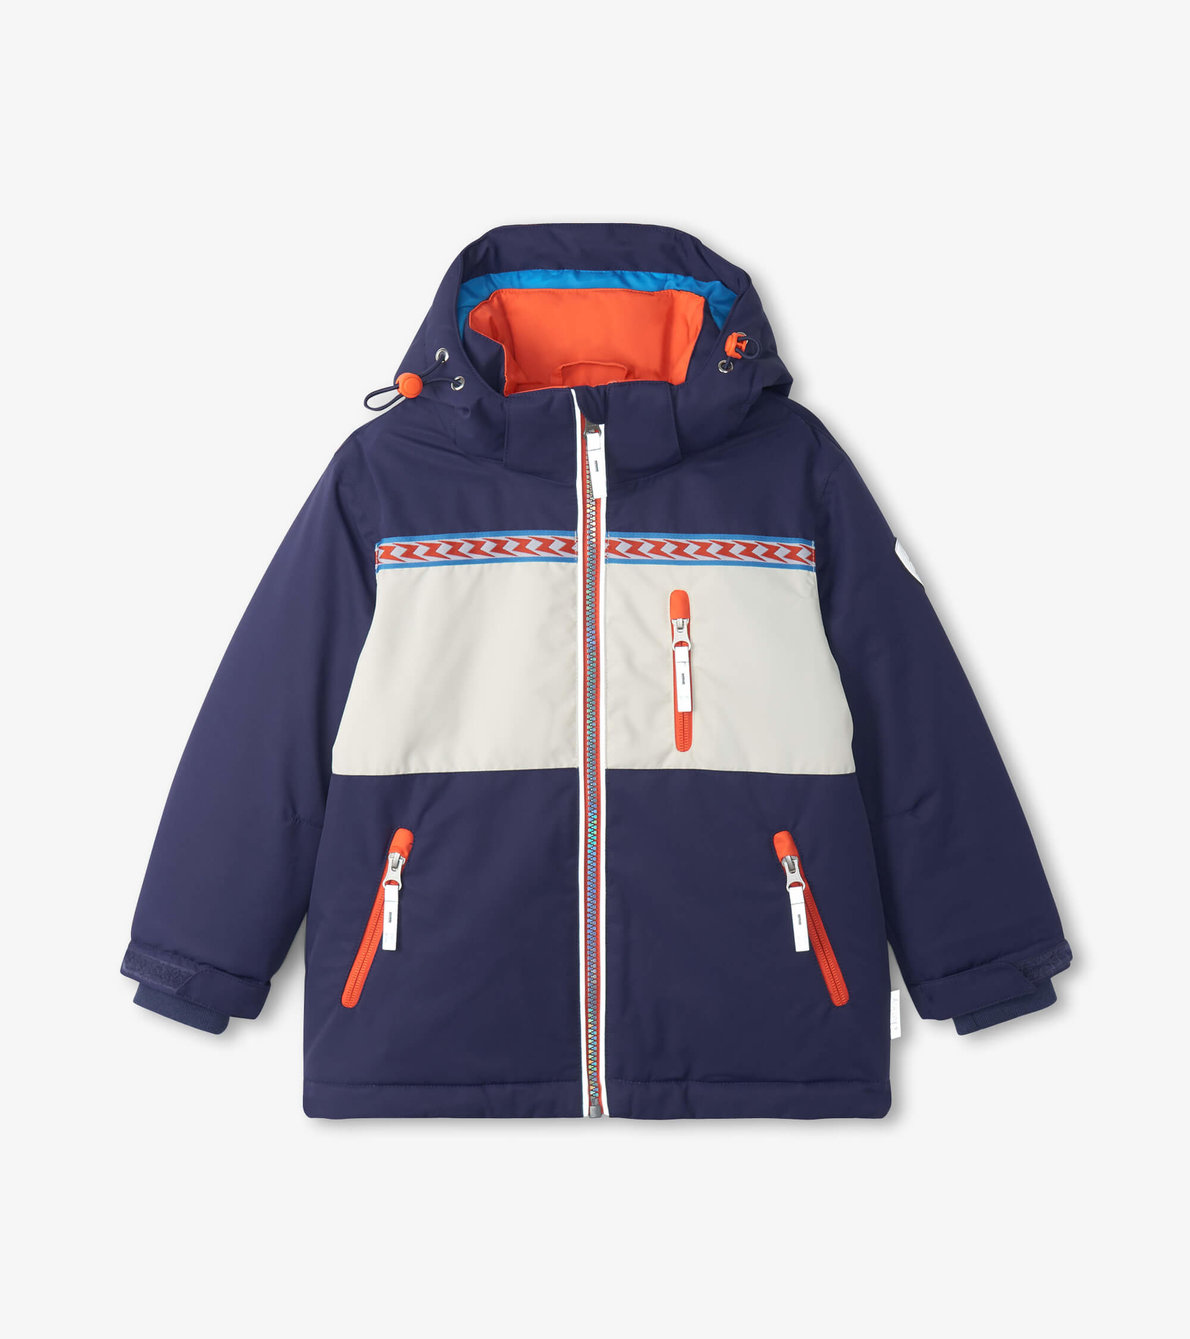 View larger image of Navy Color Block Ski Jacket